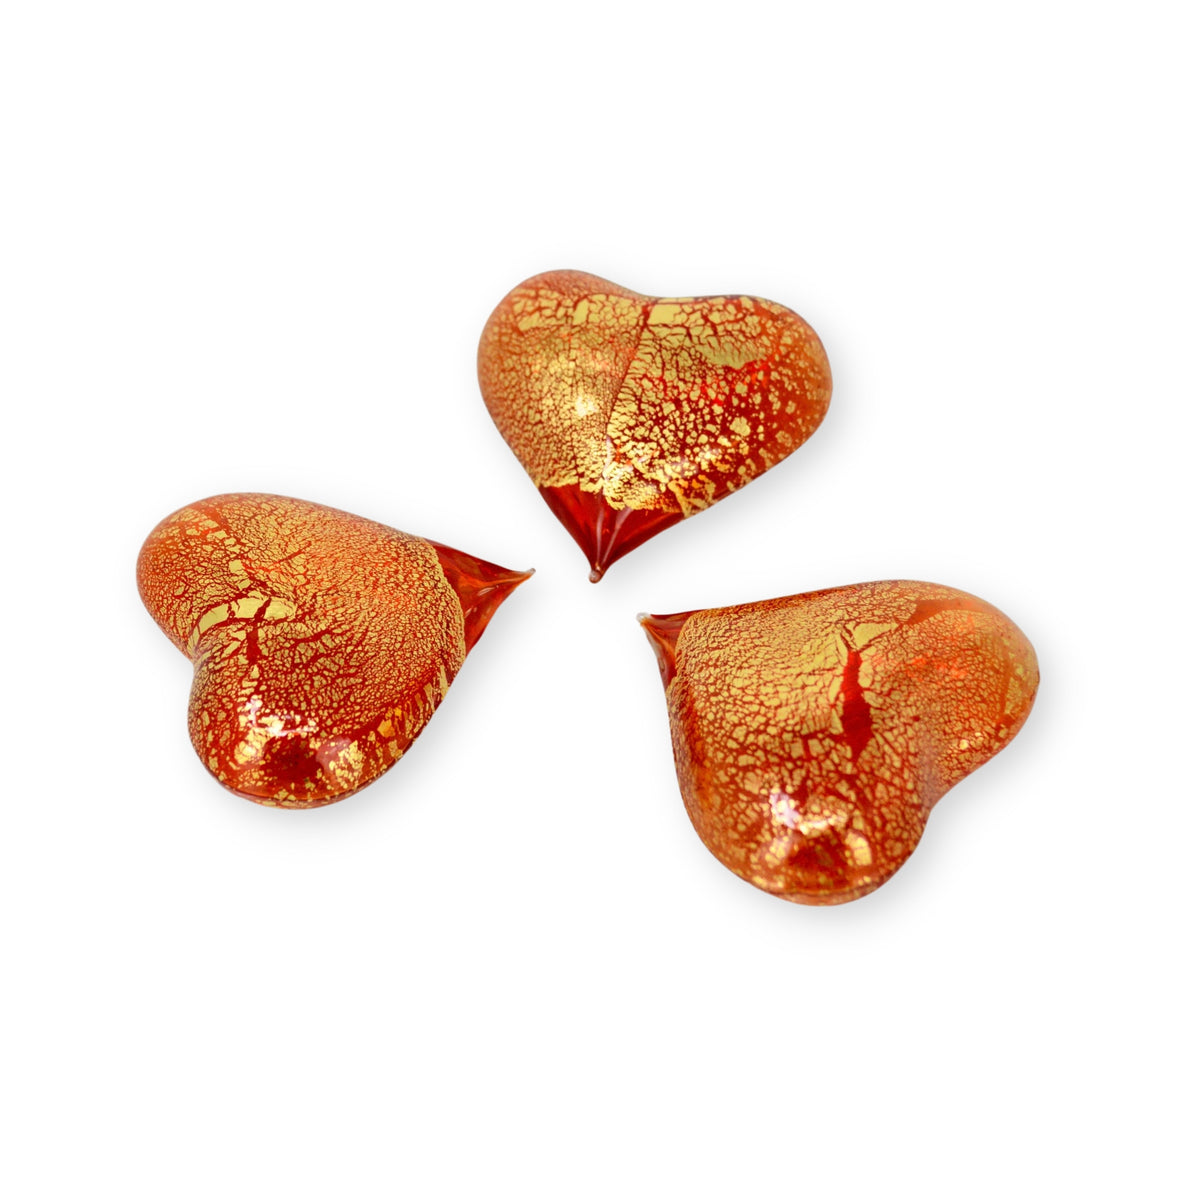 Small Blown Glass Hearts, Set of 3, Made in Murano, Italy - My Italian Decor